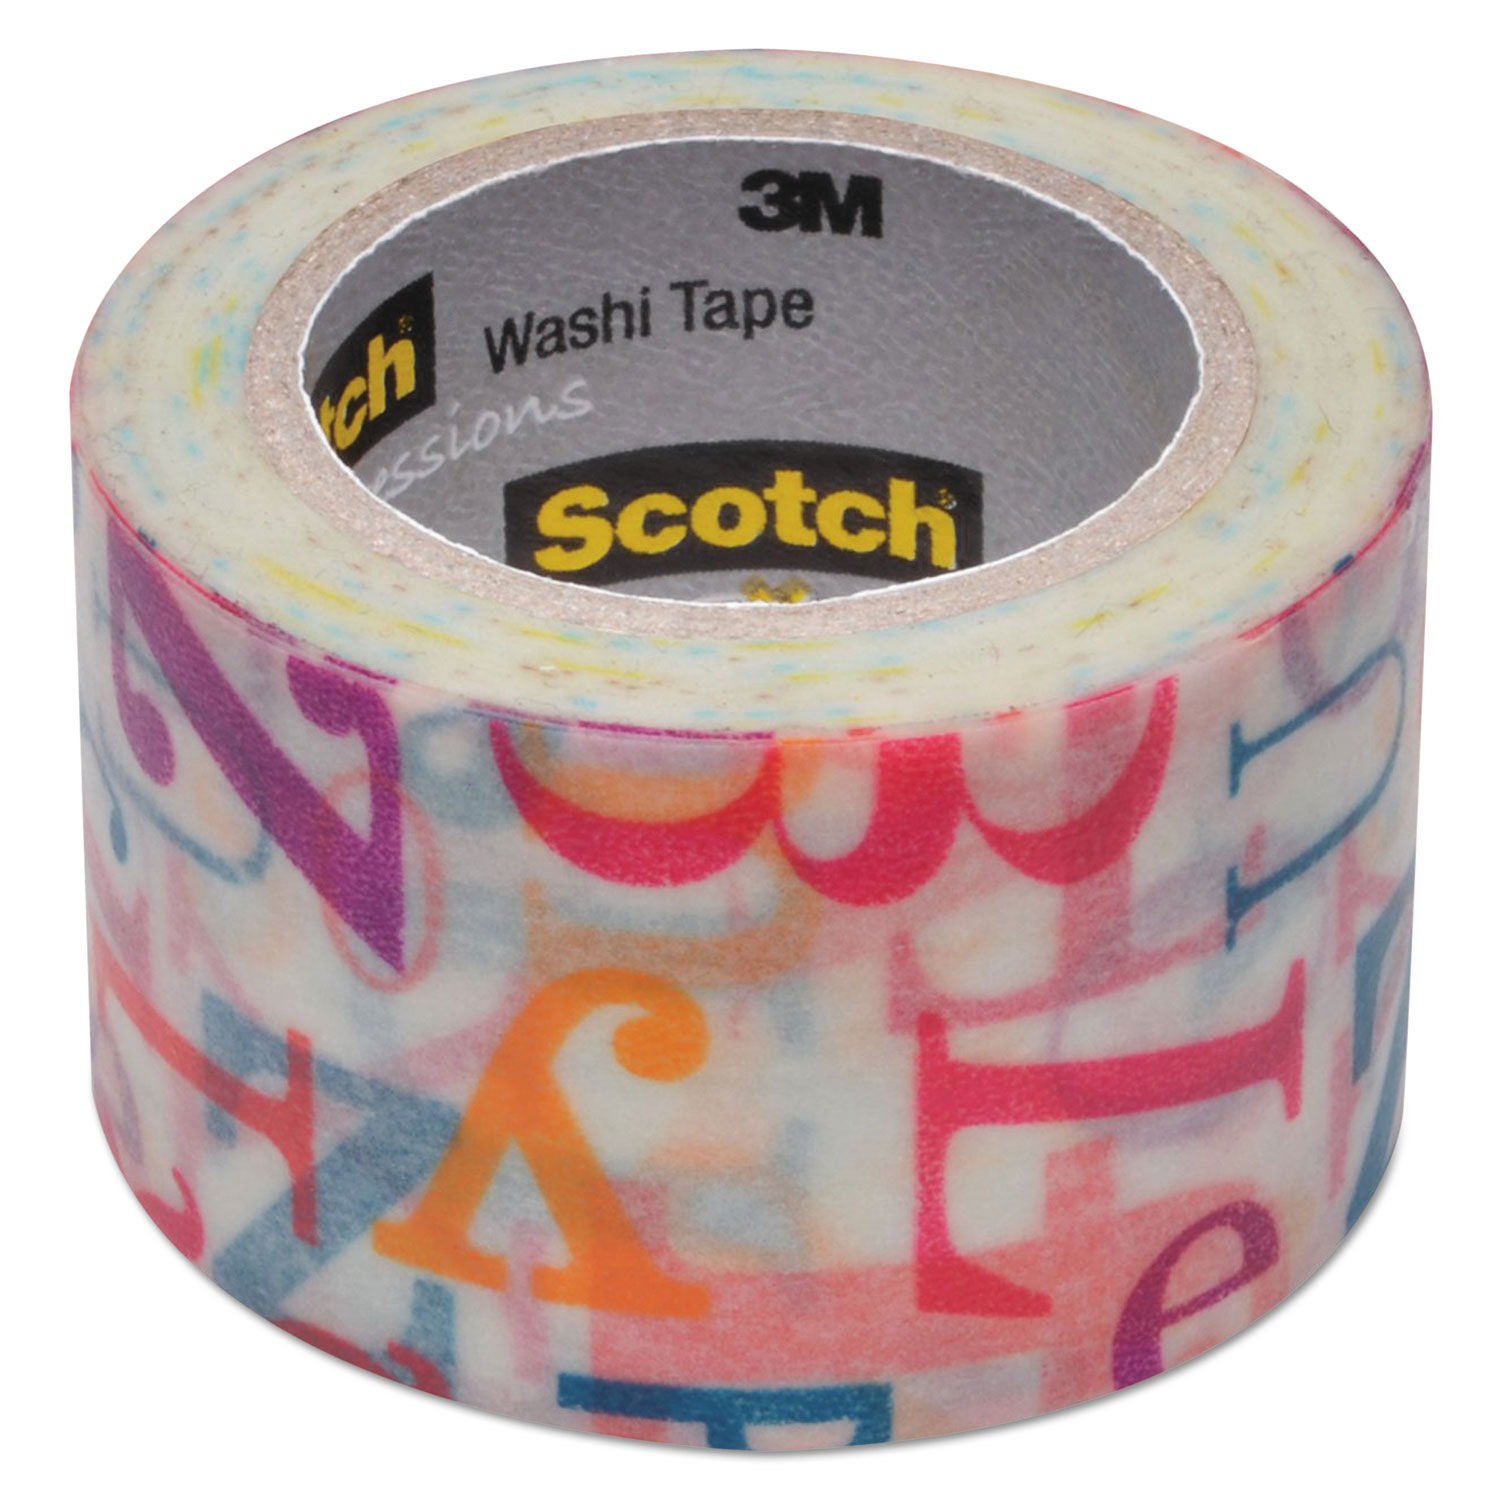 Scotch Expressions Pink Gold Washi Tape